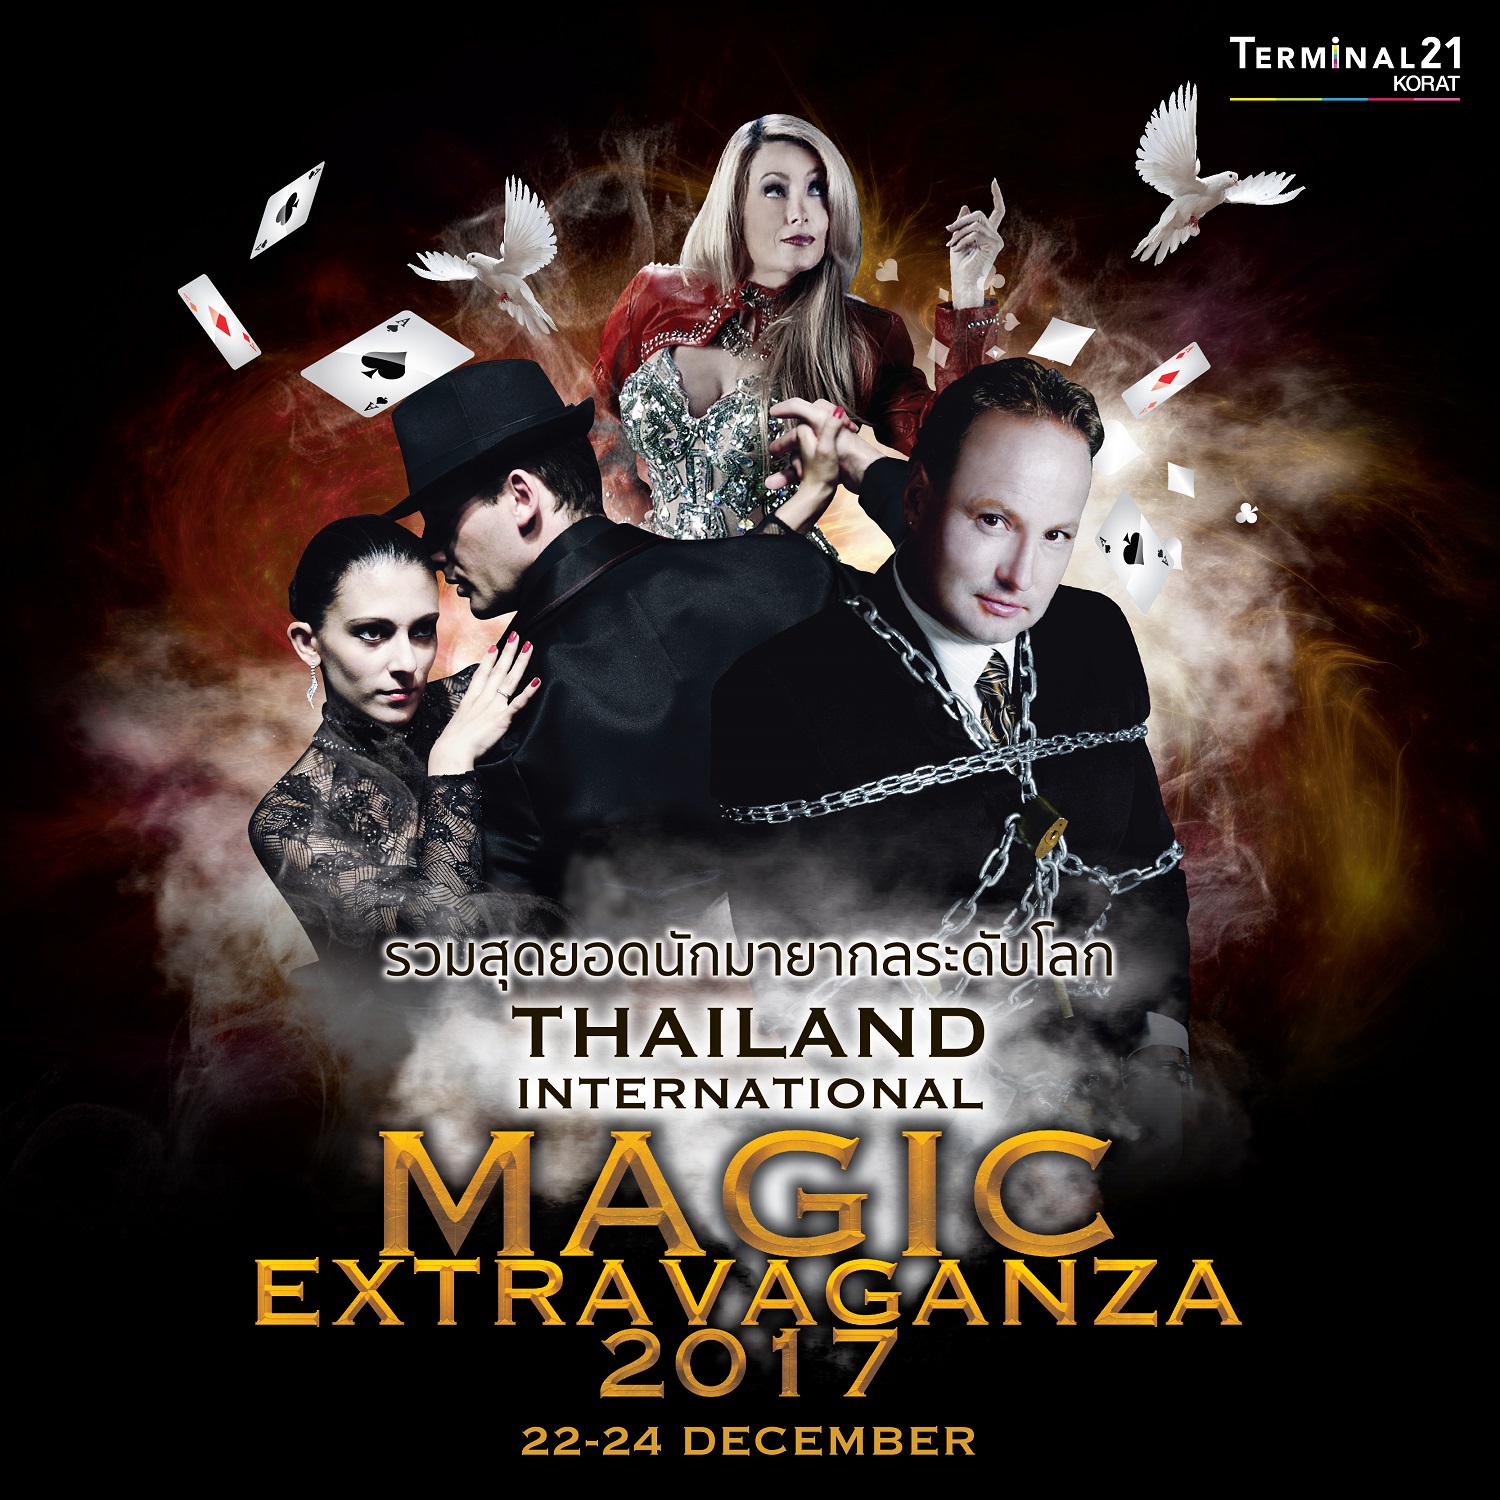 Thailand International Magic Extravaganza 2017